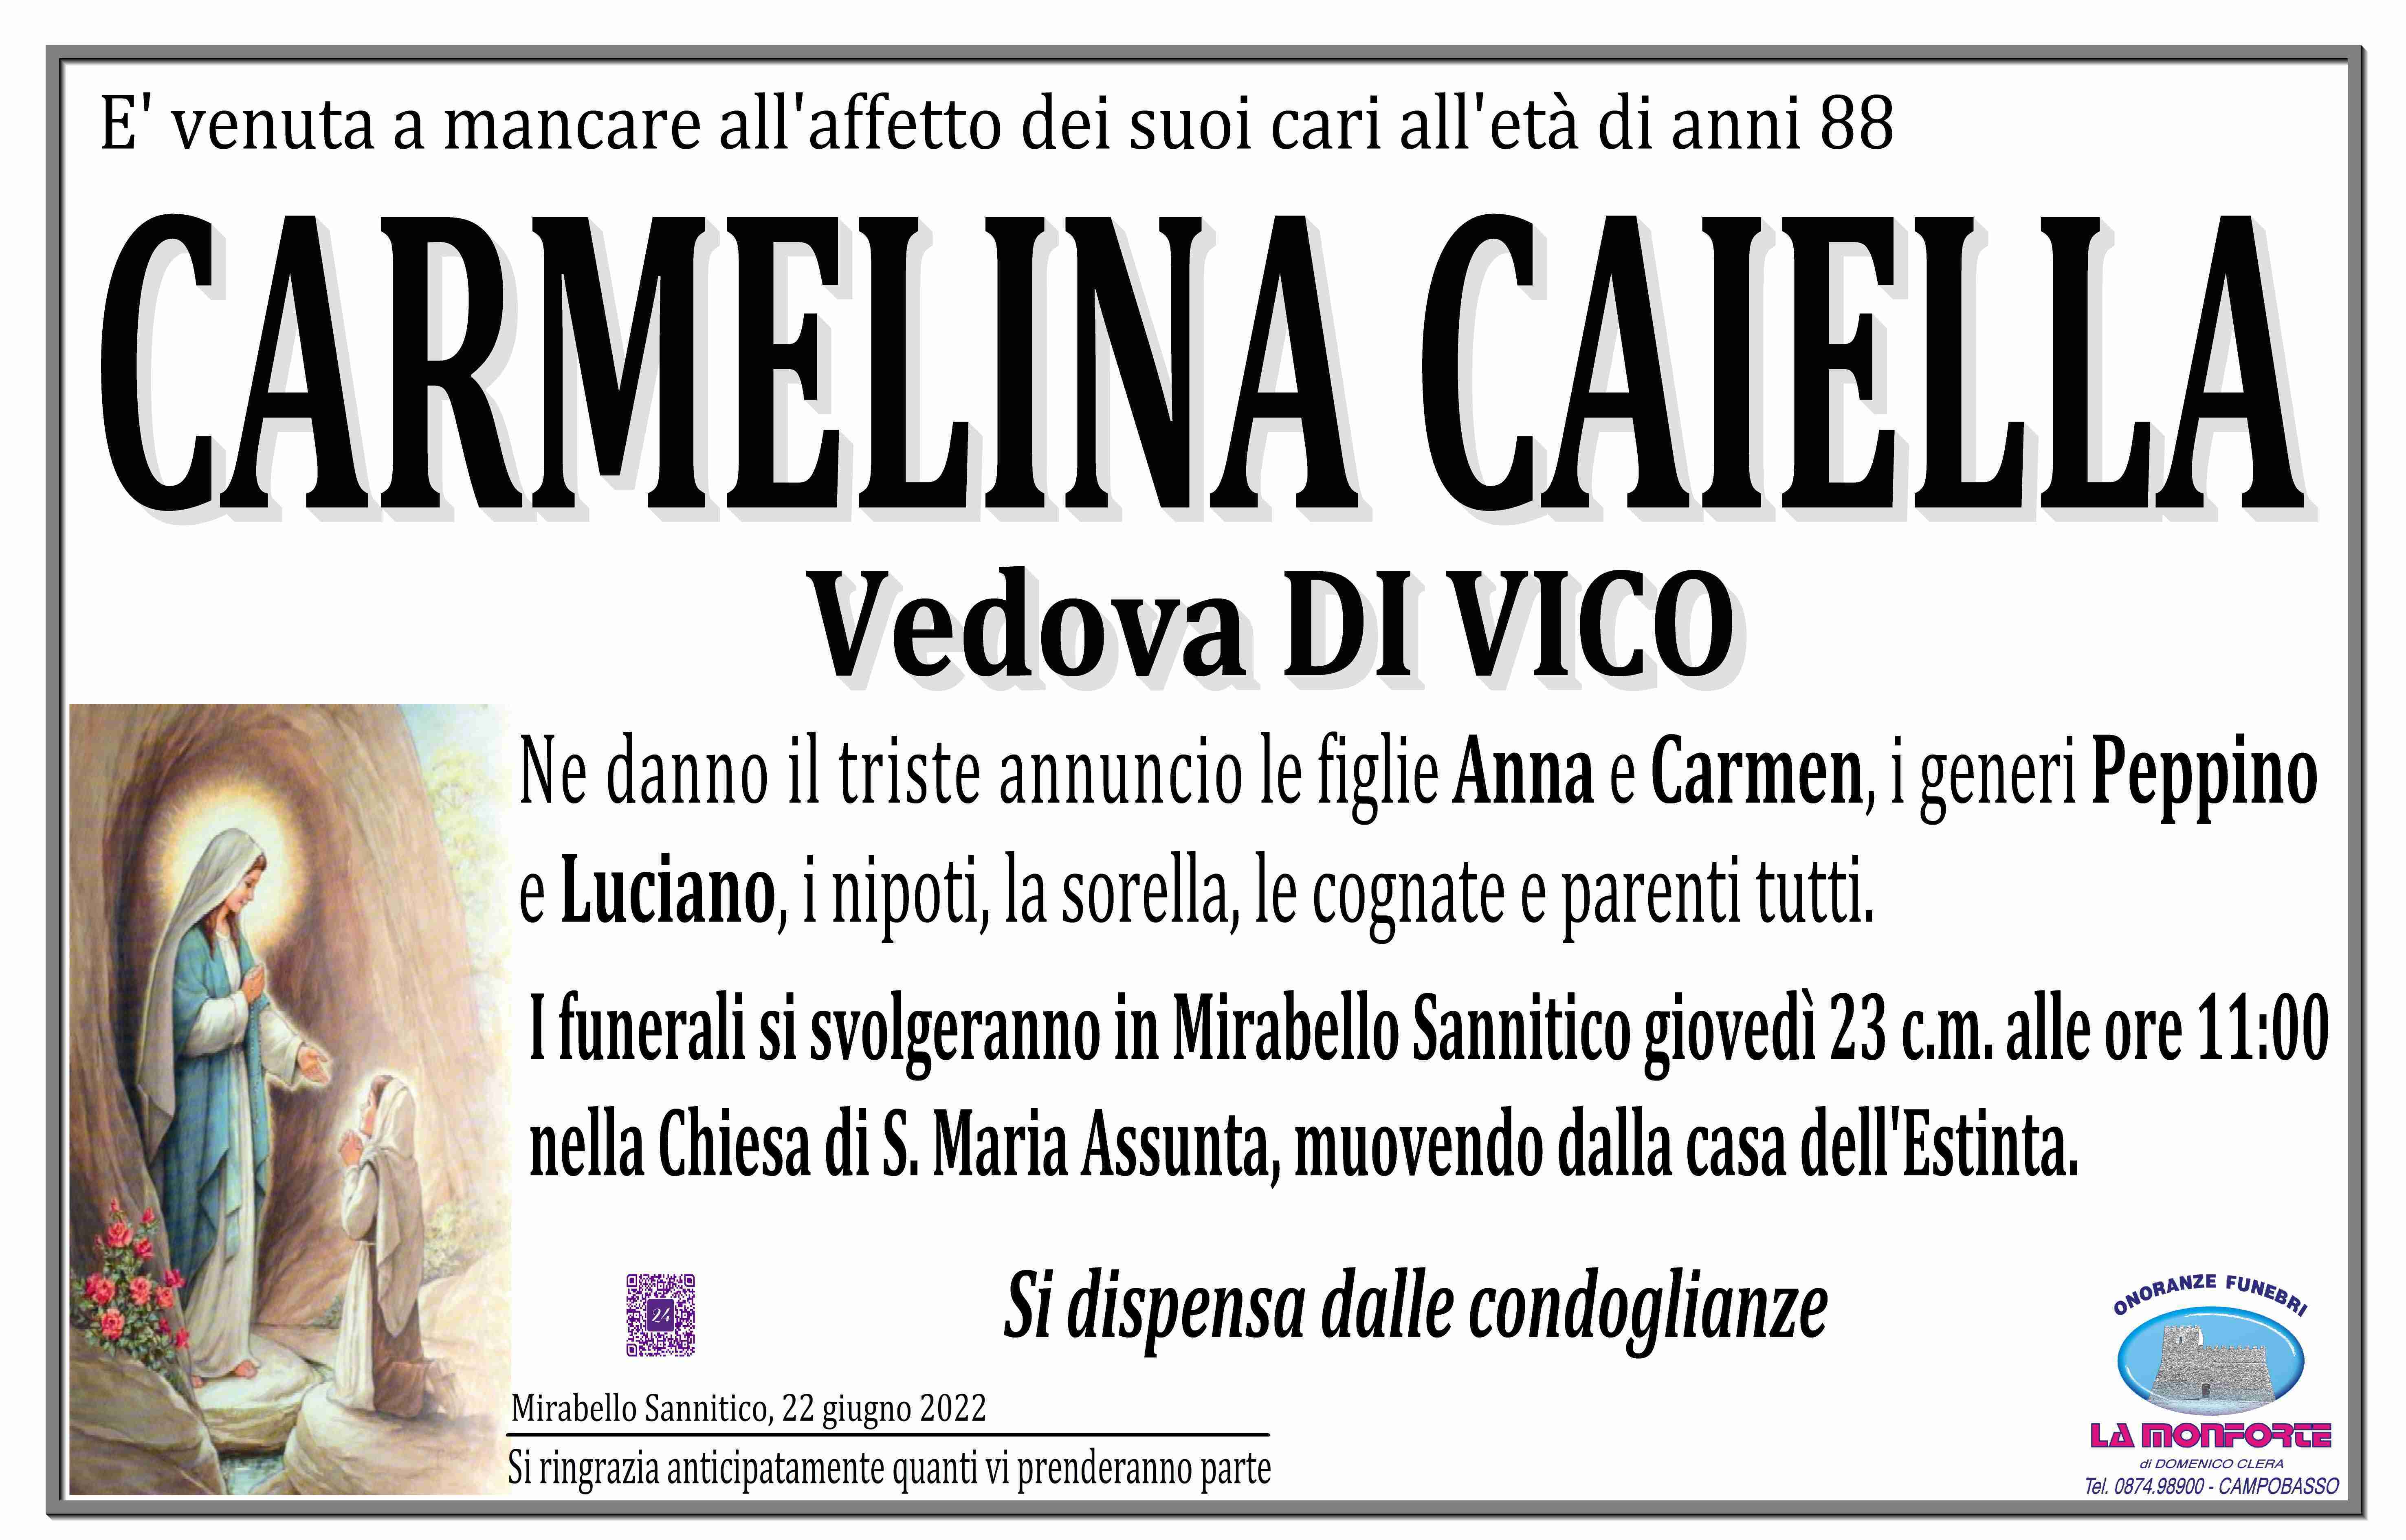 Carmela Caiella